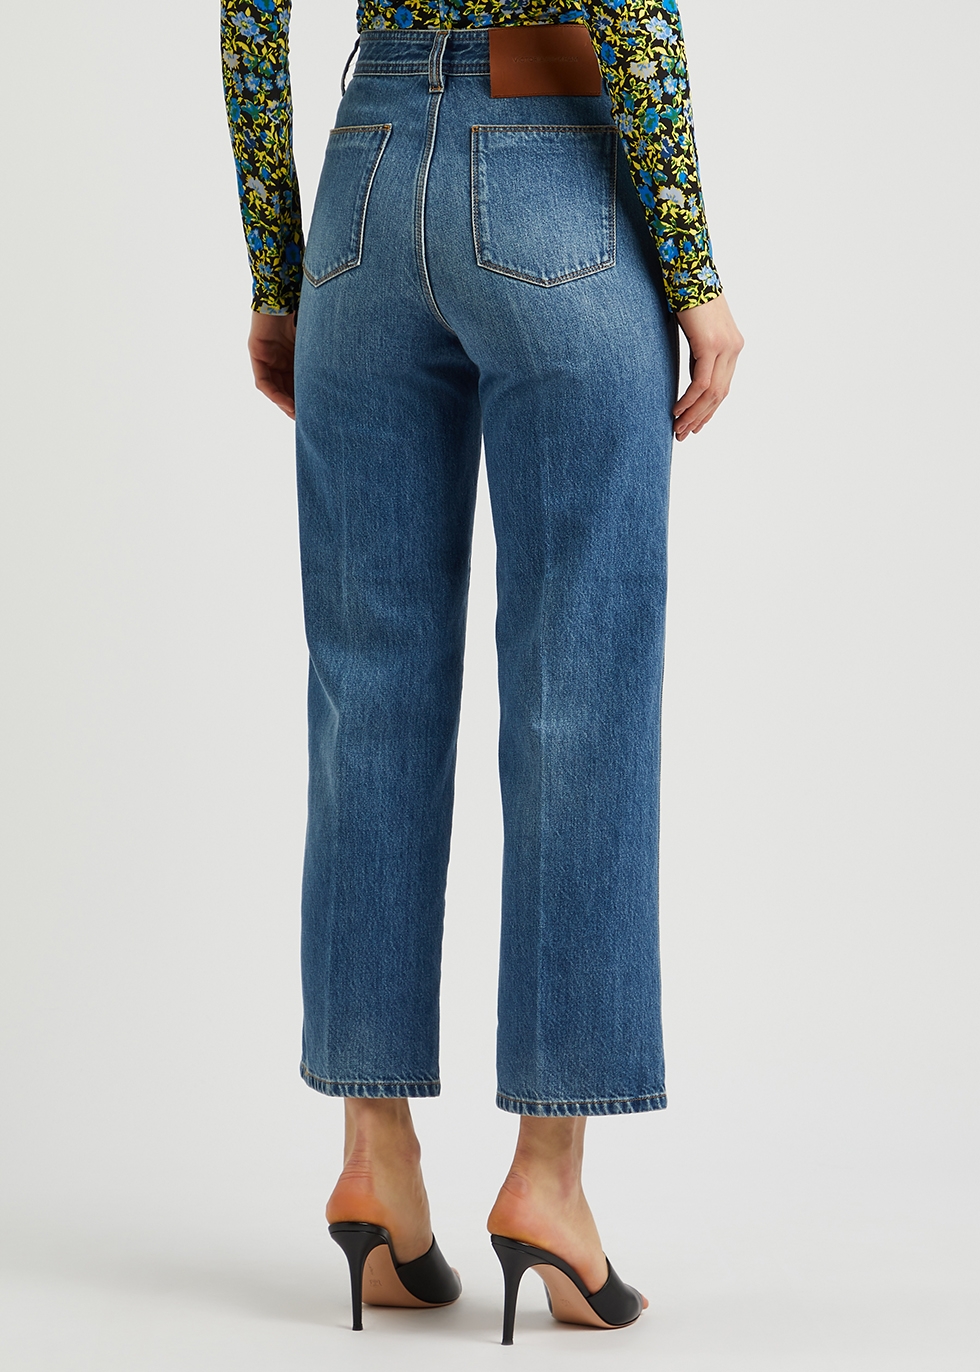 Victoria Beckham Stevie 70's blue cropped straight-leg jeans 